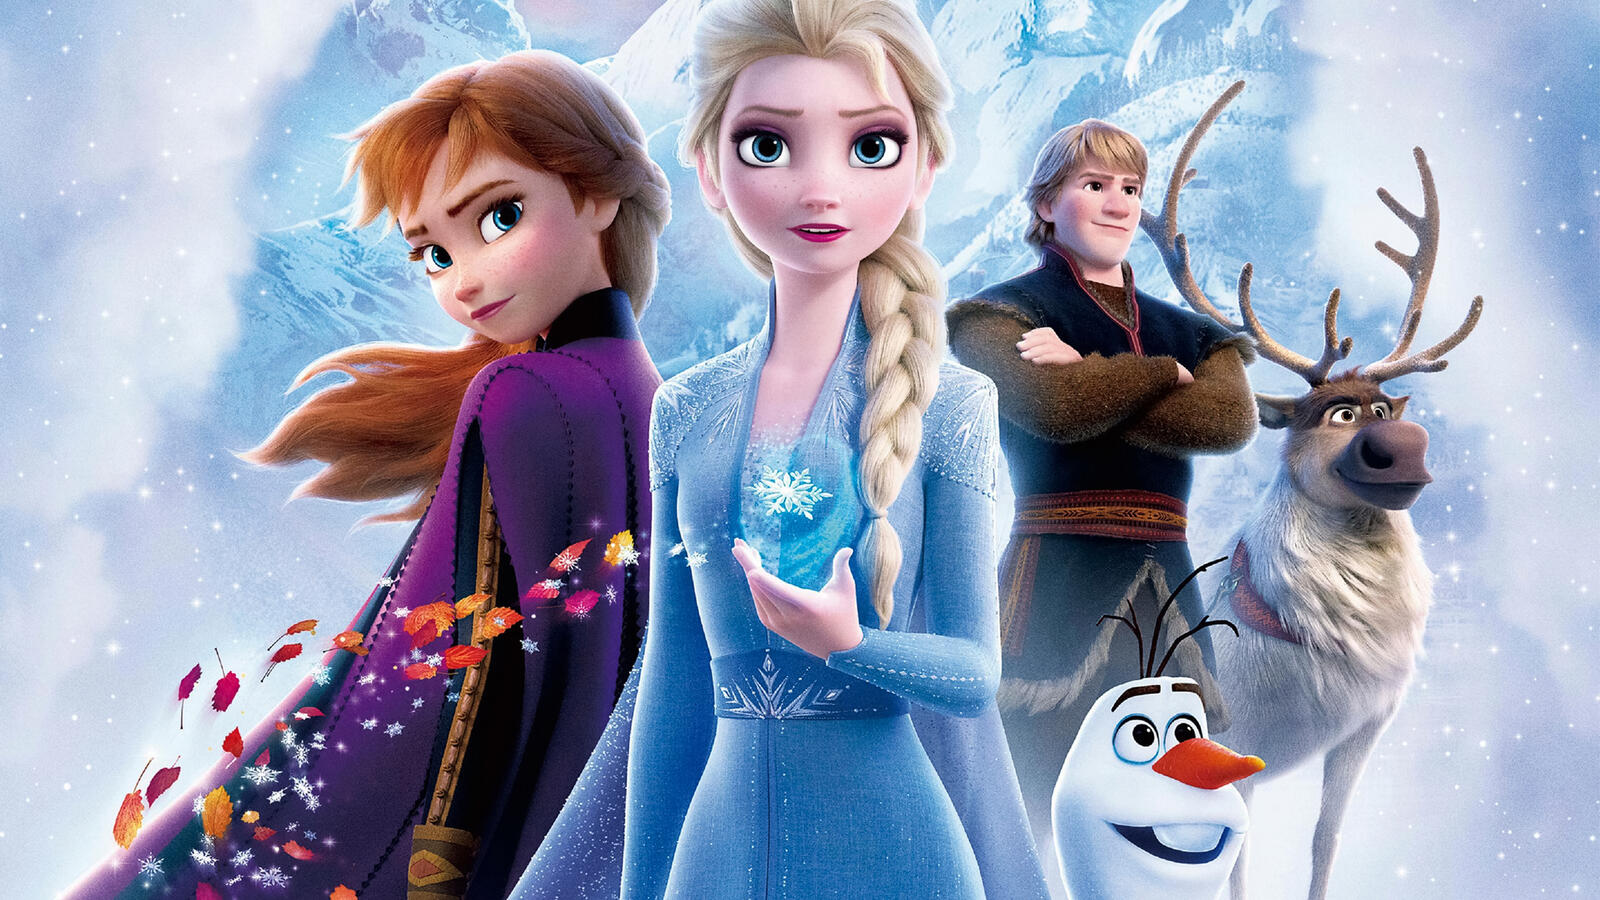 Wallpapers 2019 Movies poster Frozen 2 on the desktop